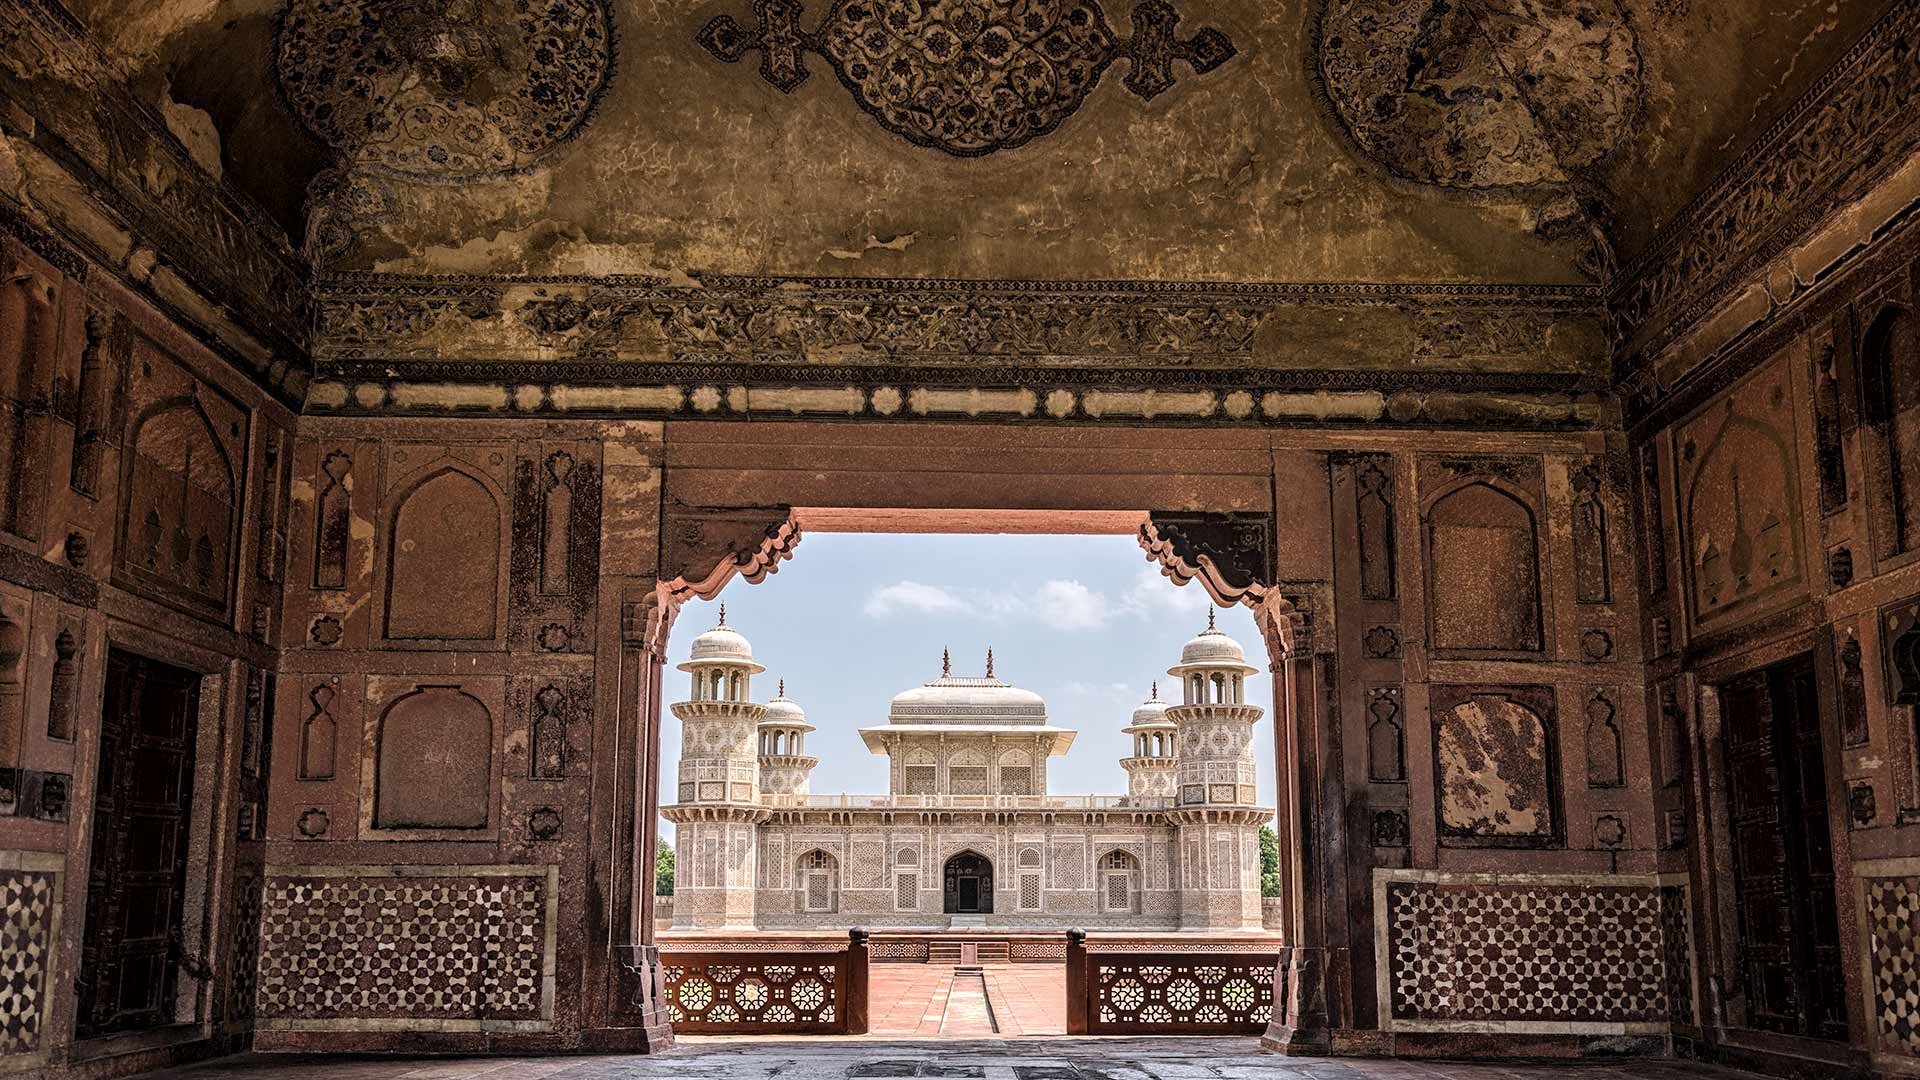 Precursor to the Taj Mahal, Historical significance, Architectural influences, Heritage site, 1920x1080 Full HD Desktop